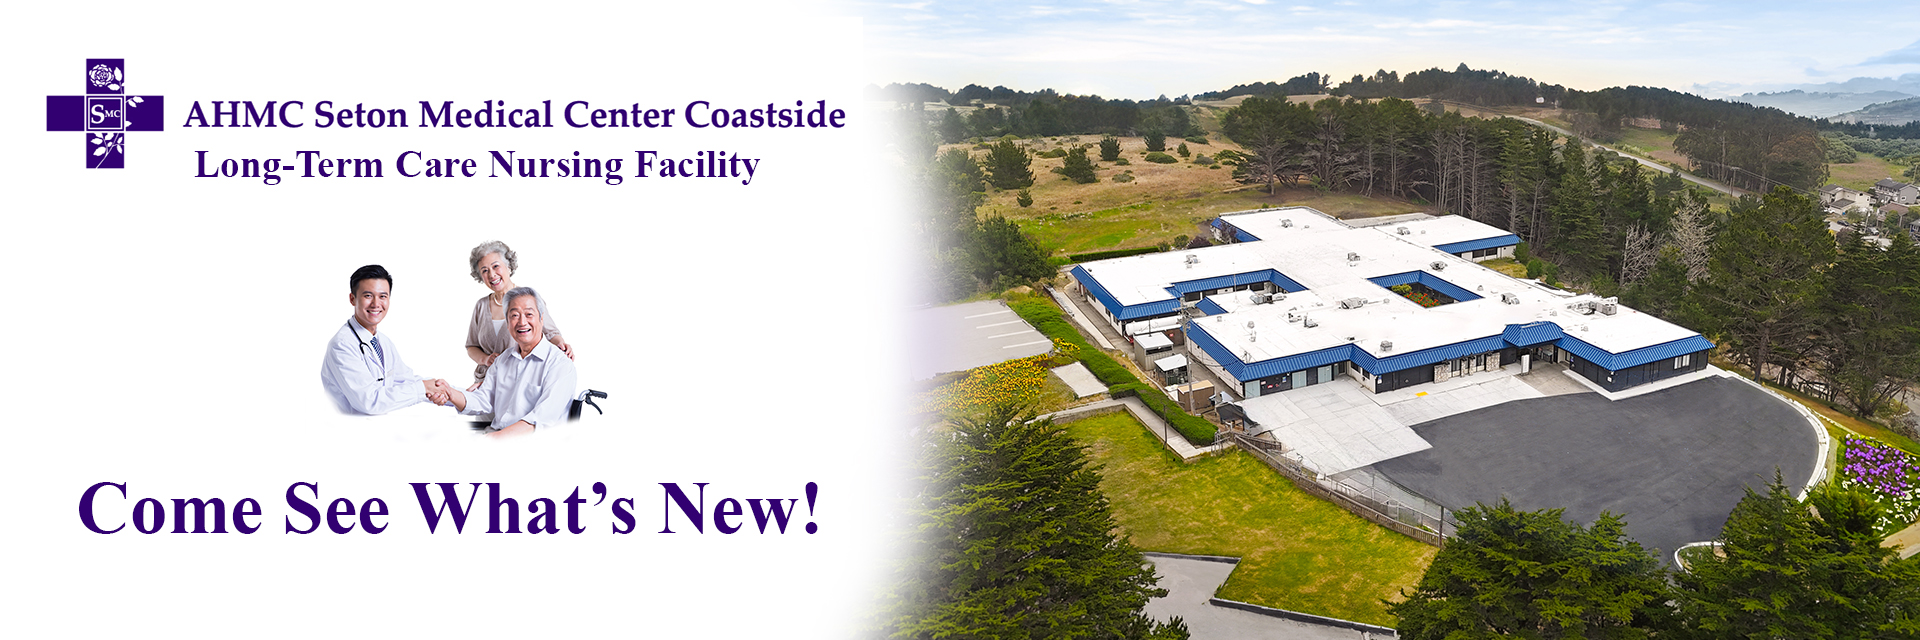 Seton Medical Center Coastside. Long-Term Care Nursing Facility. Come See What's New!